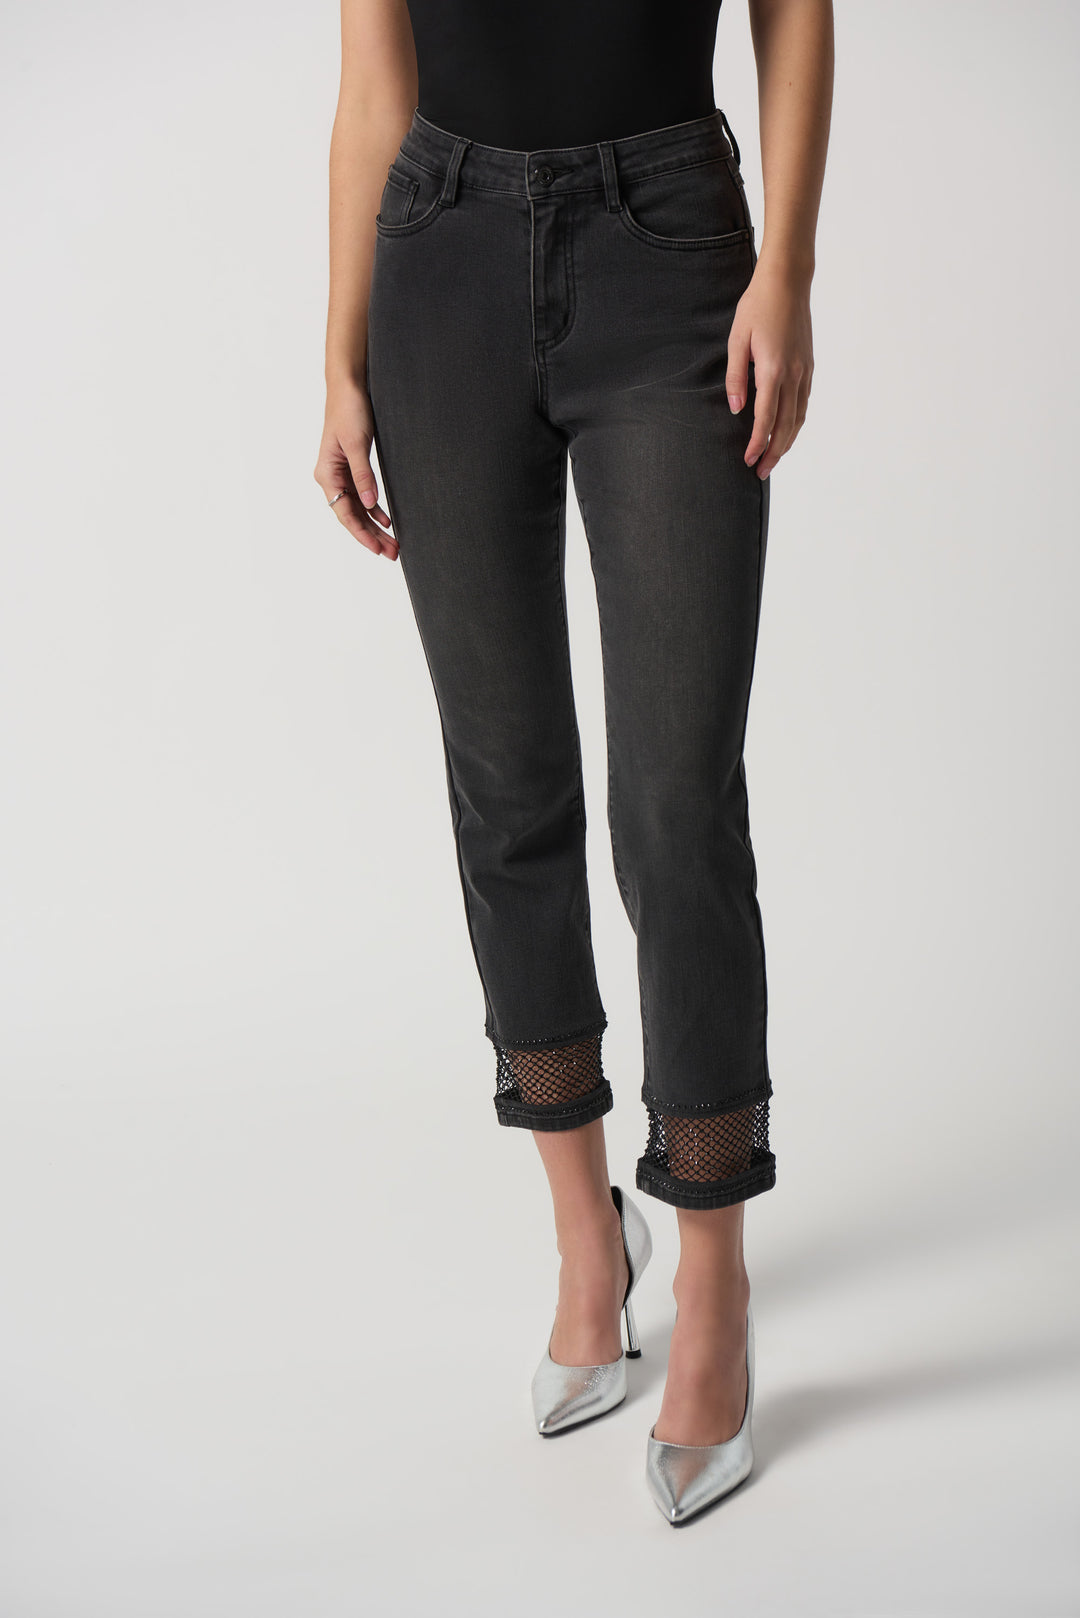 Joseph Ribkoff Fall 2023 women's casual slim cropped denim grey jeans - front